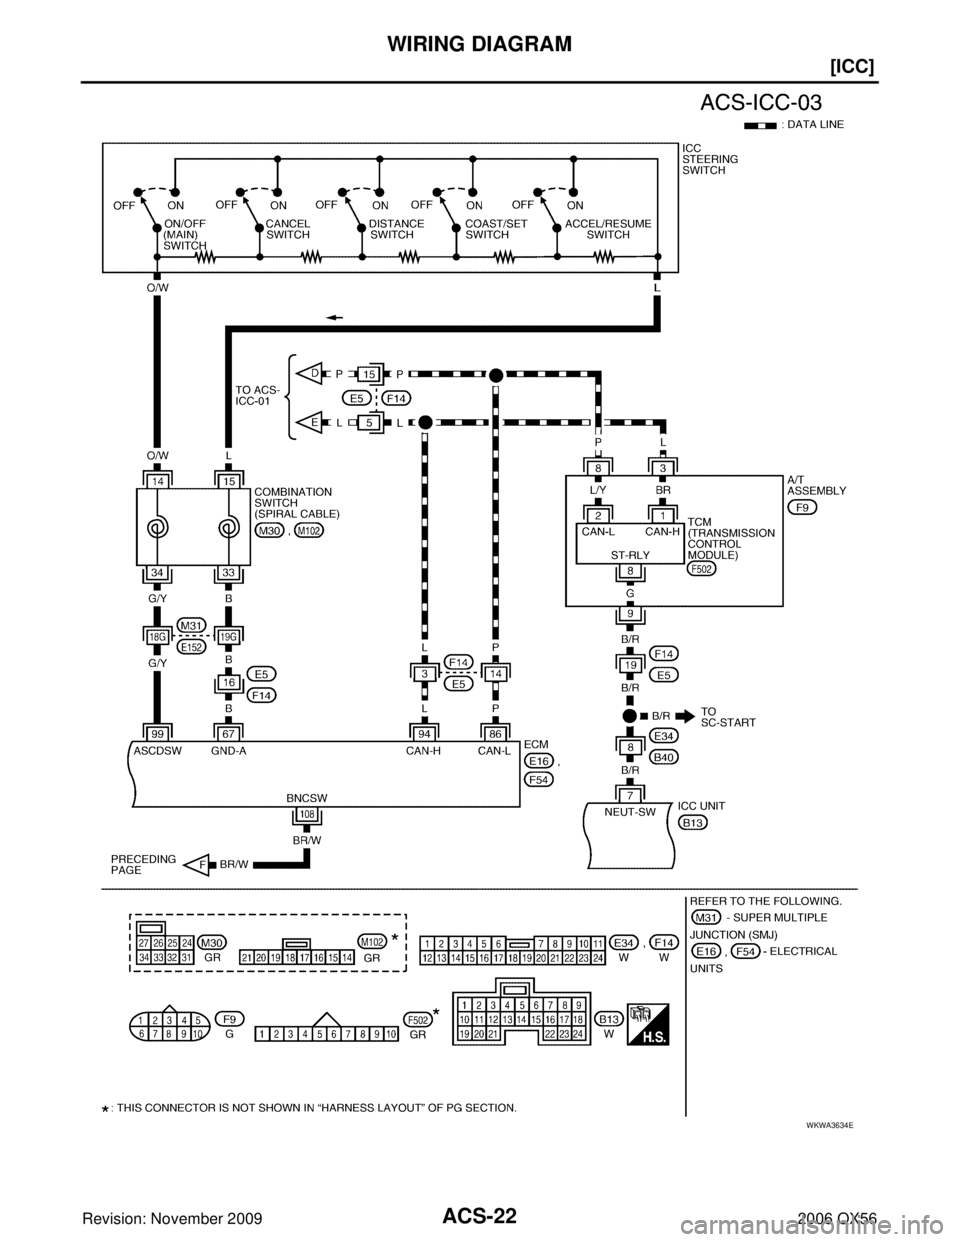 INFINITI QX56 2006  Factory Owners Guide ACS-22
[ICC]
WIRING DIAGRAM
Revision: November 20092006 QX56
WKWA3634E 